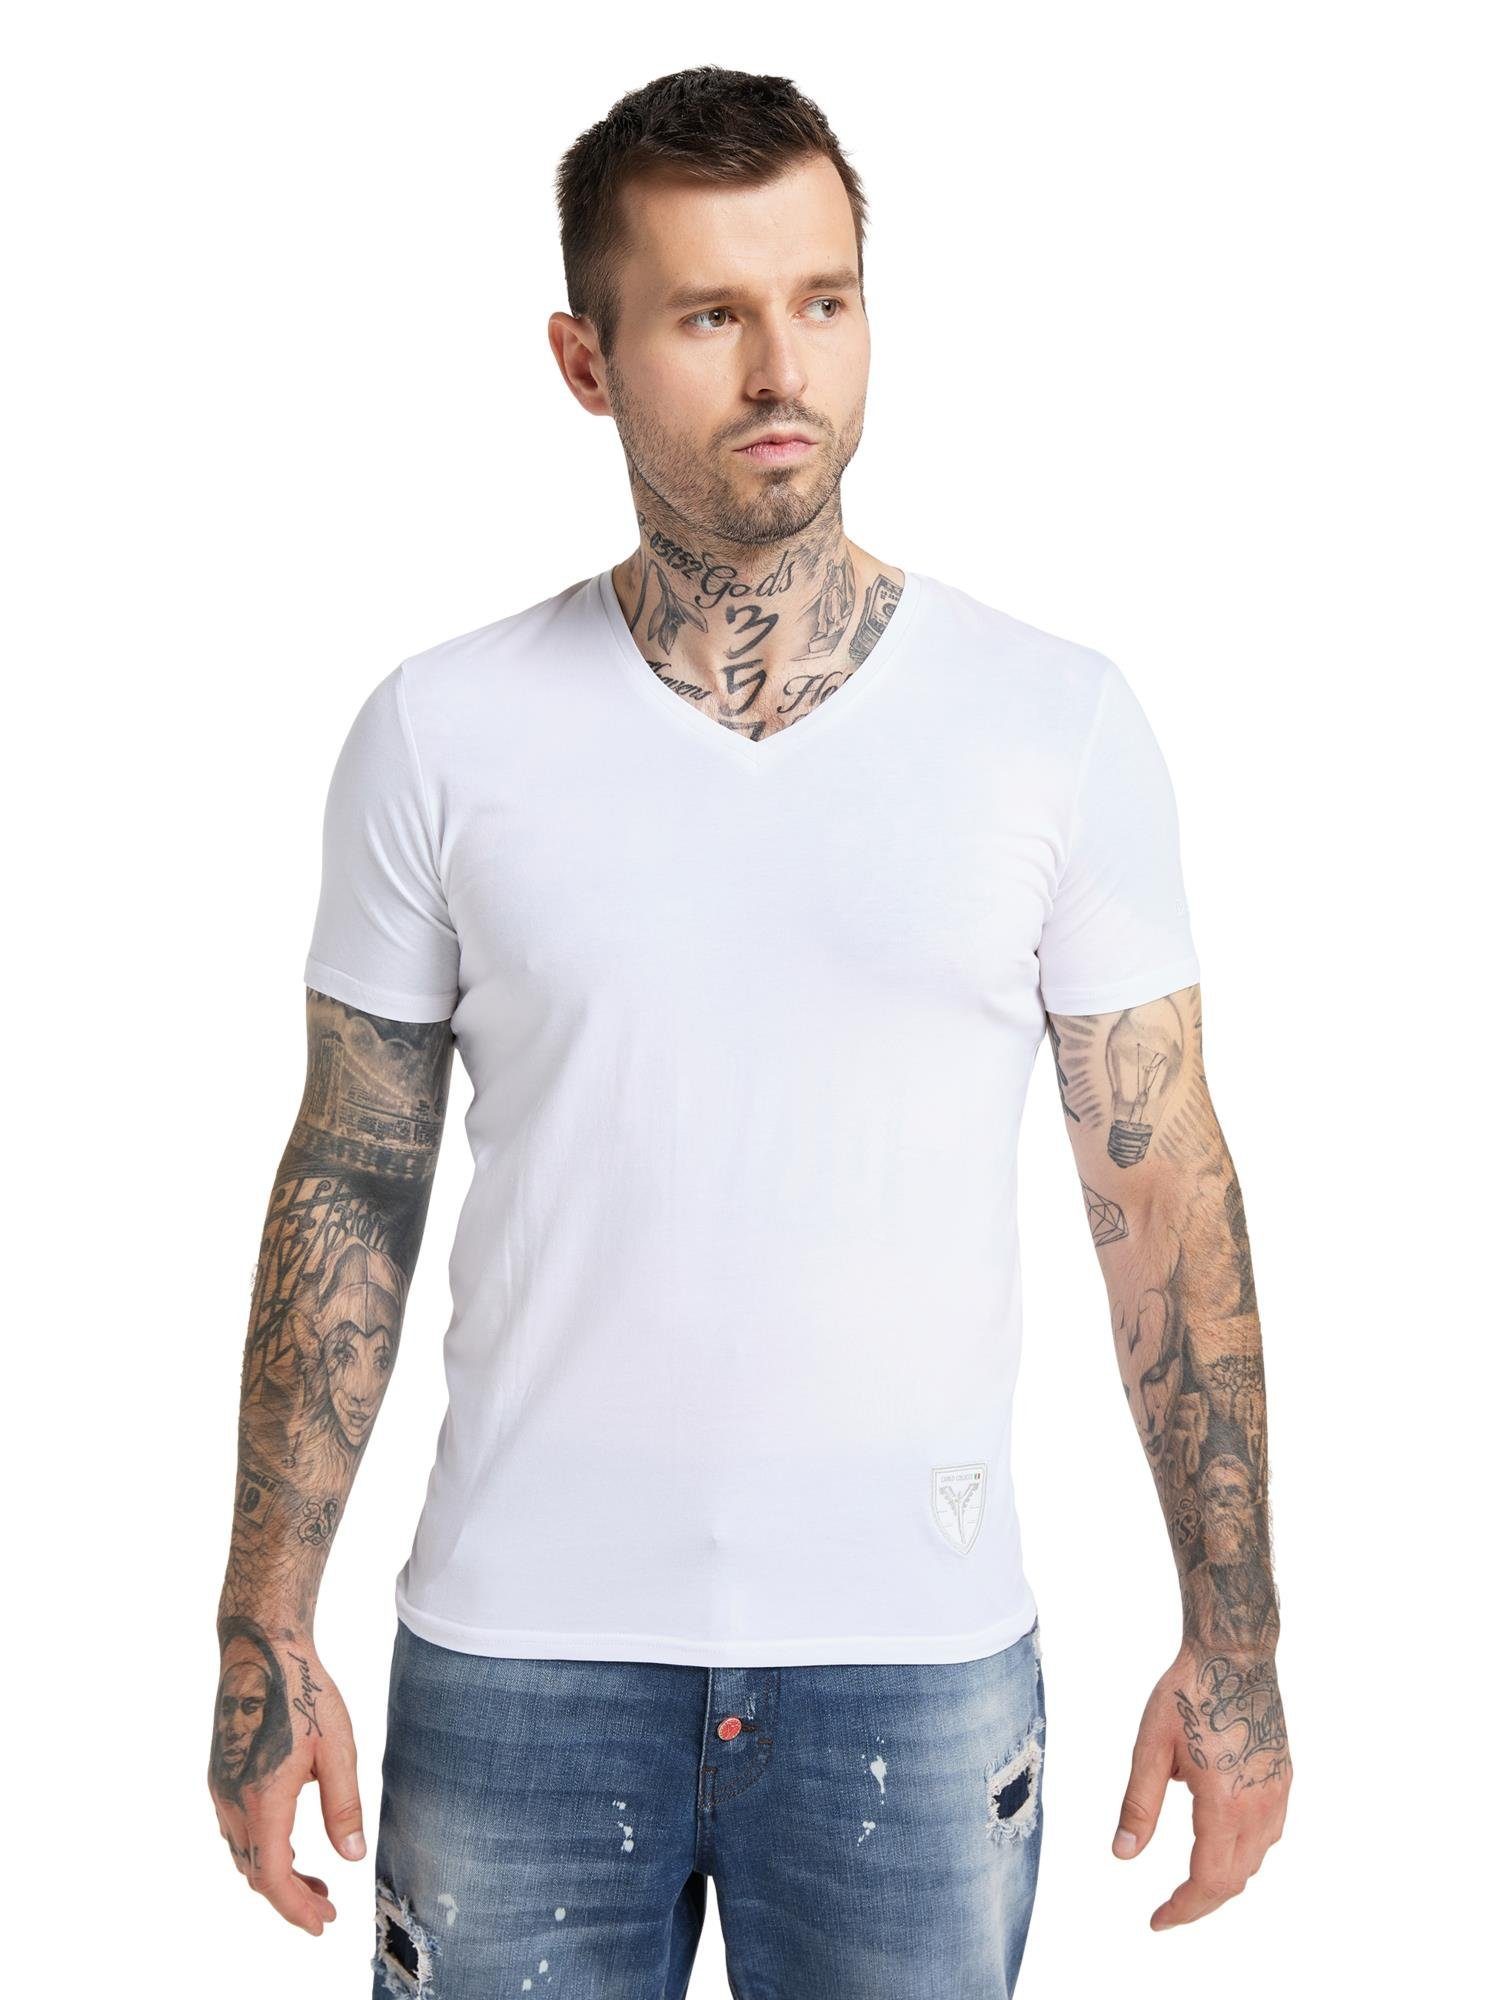 CARLO Cavallari T-Shirt Weiß COLUCCI